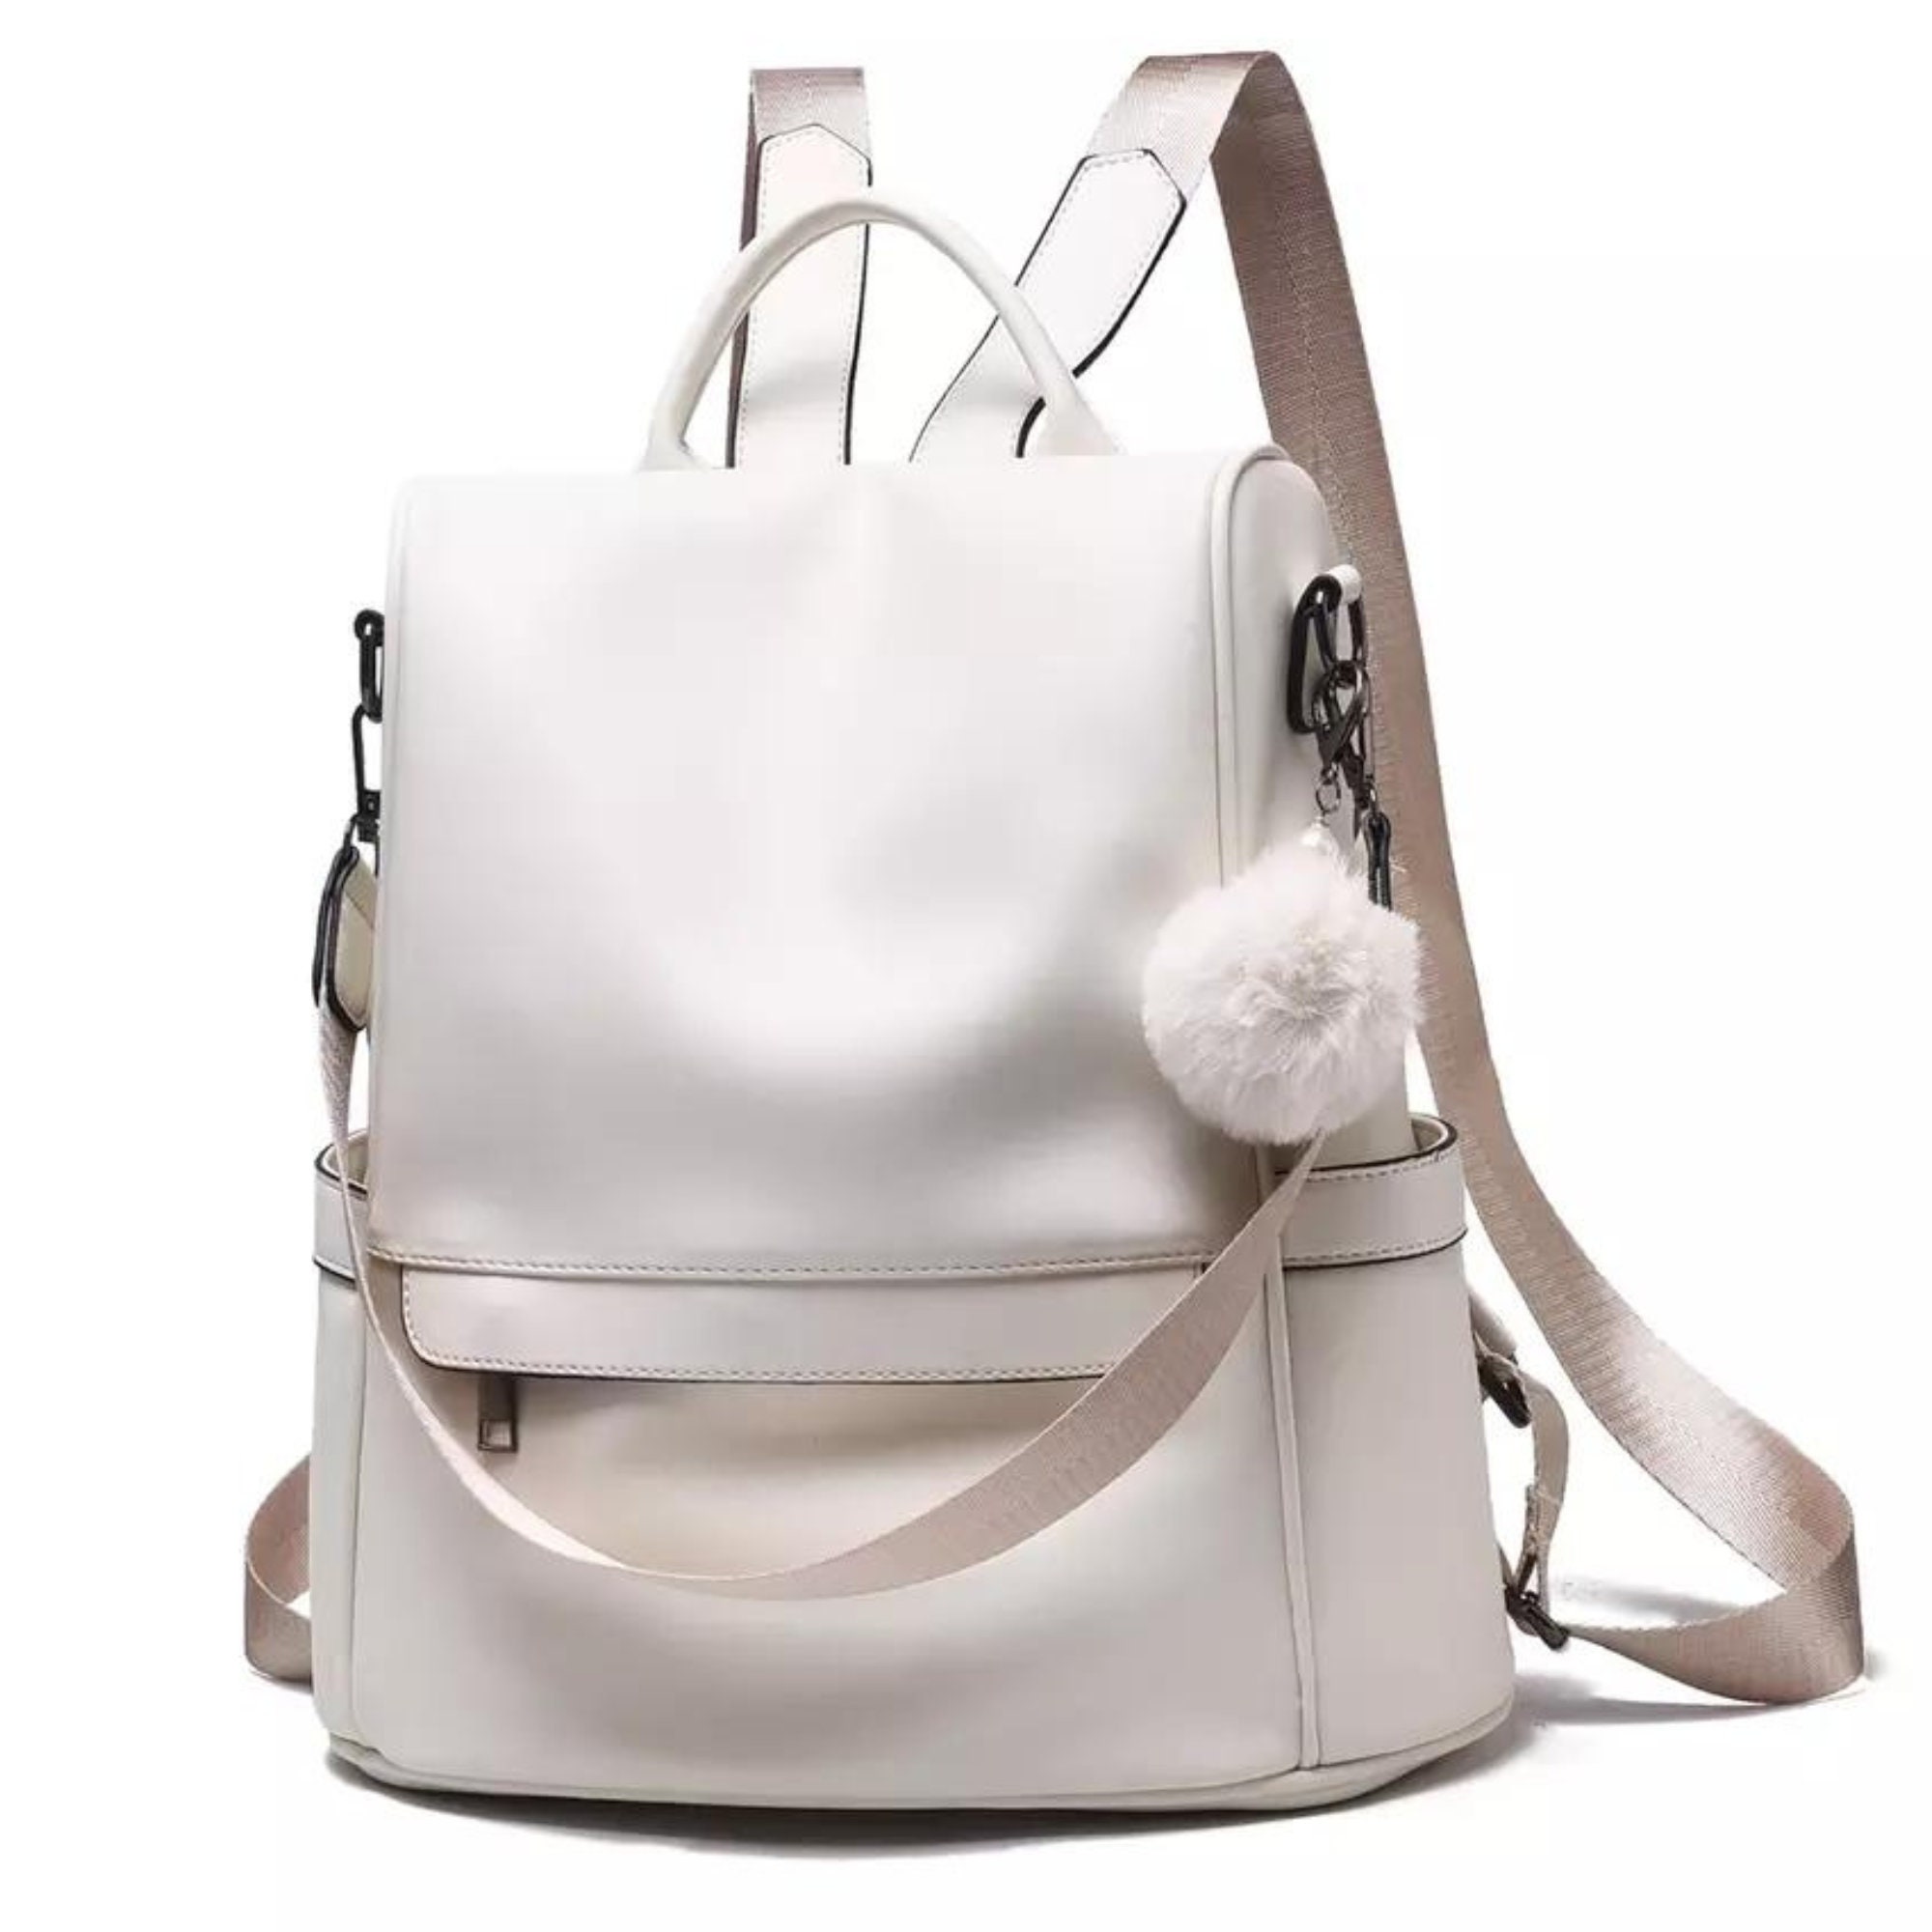 Urban Originals FRINGE MULTI WEAR Backpack PURSE Satchel Tote Bag Tan NWT |  eBay